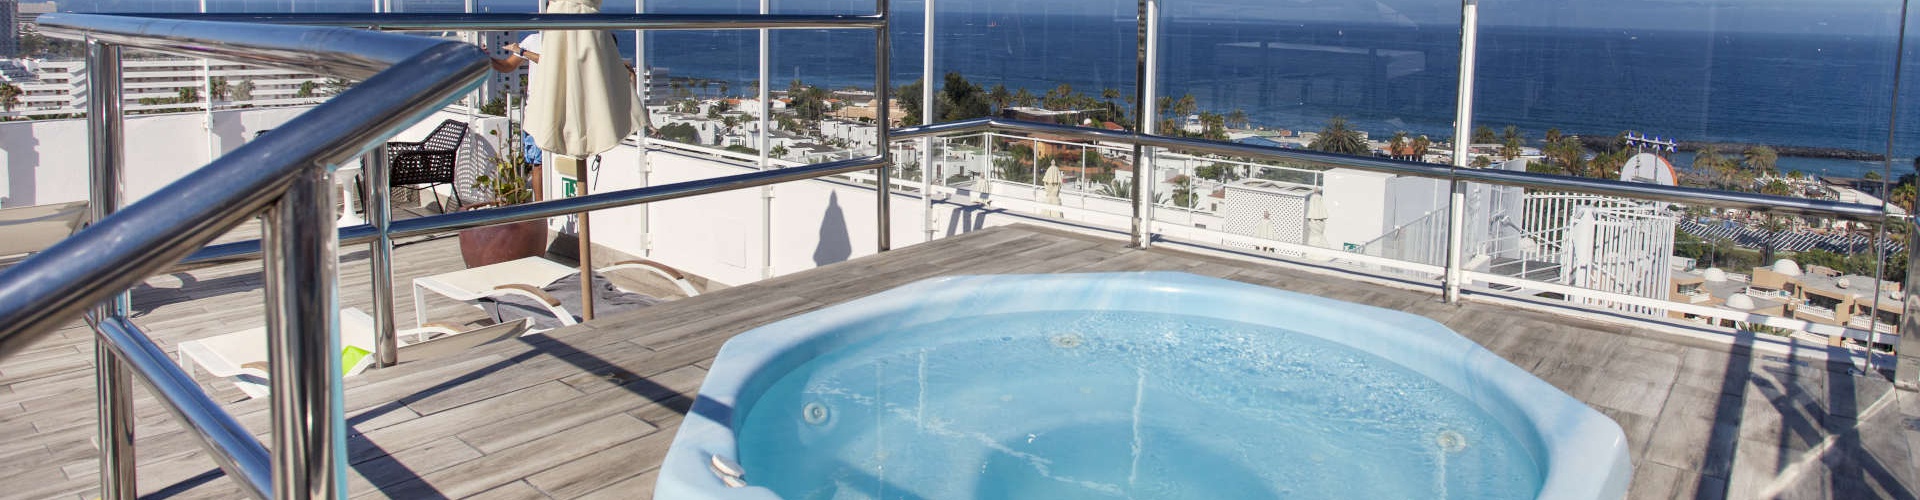 Coral Hotels - Costa Adeje - 